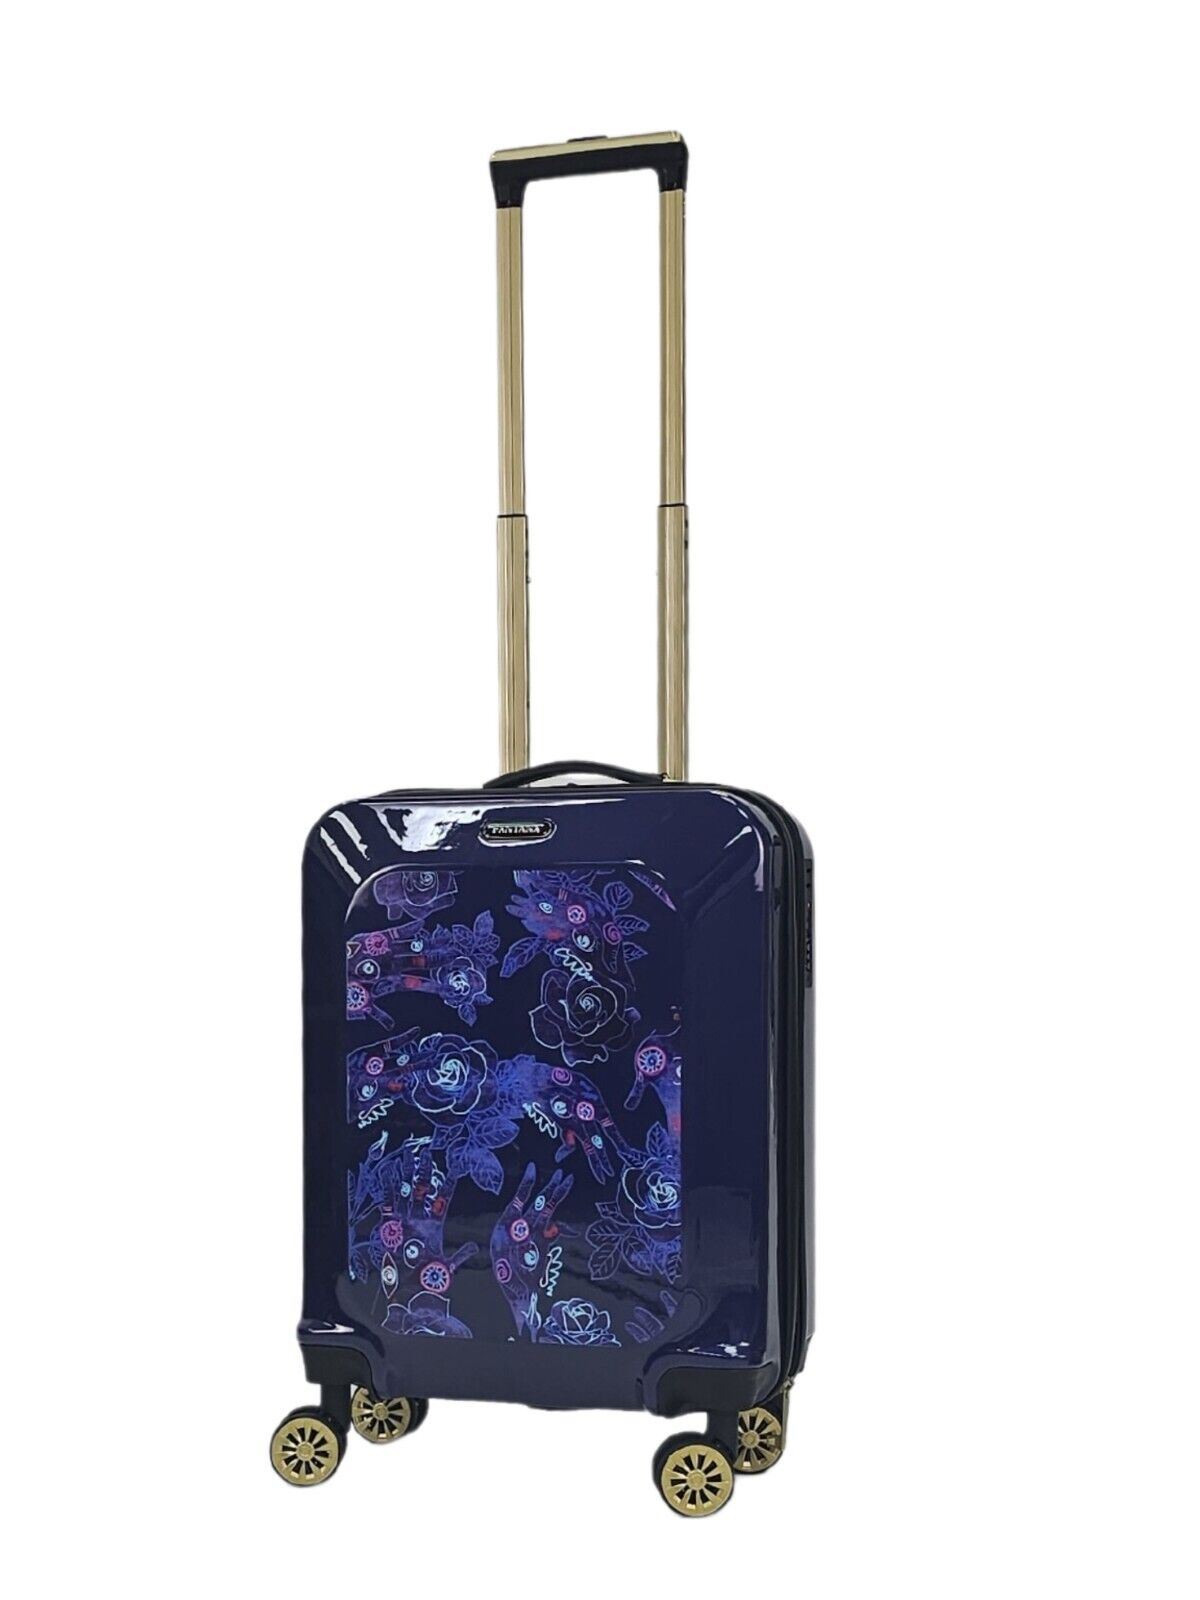 Hard Shell Cabin 4 Wheel Suitcase Flower Print Luggage